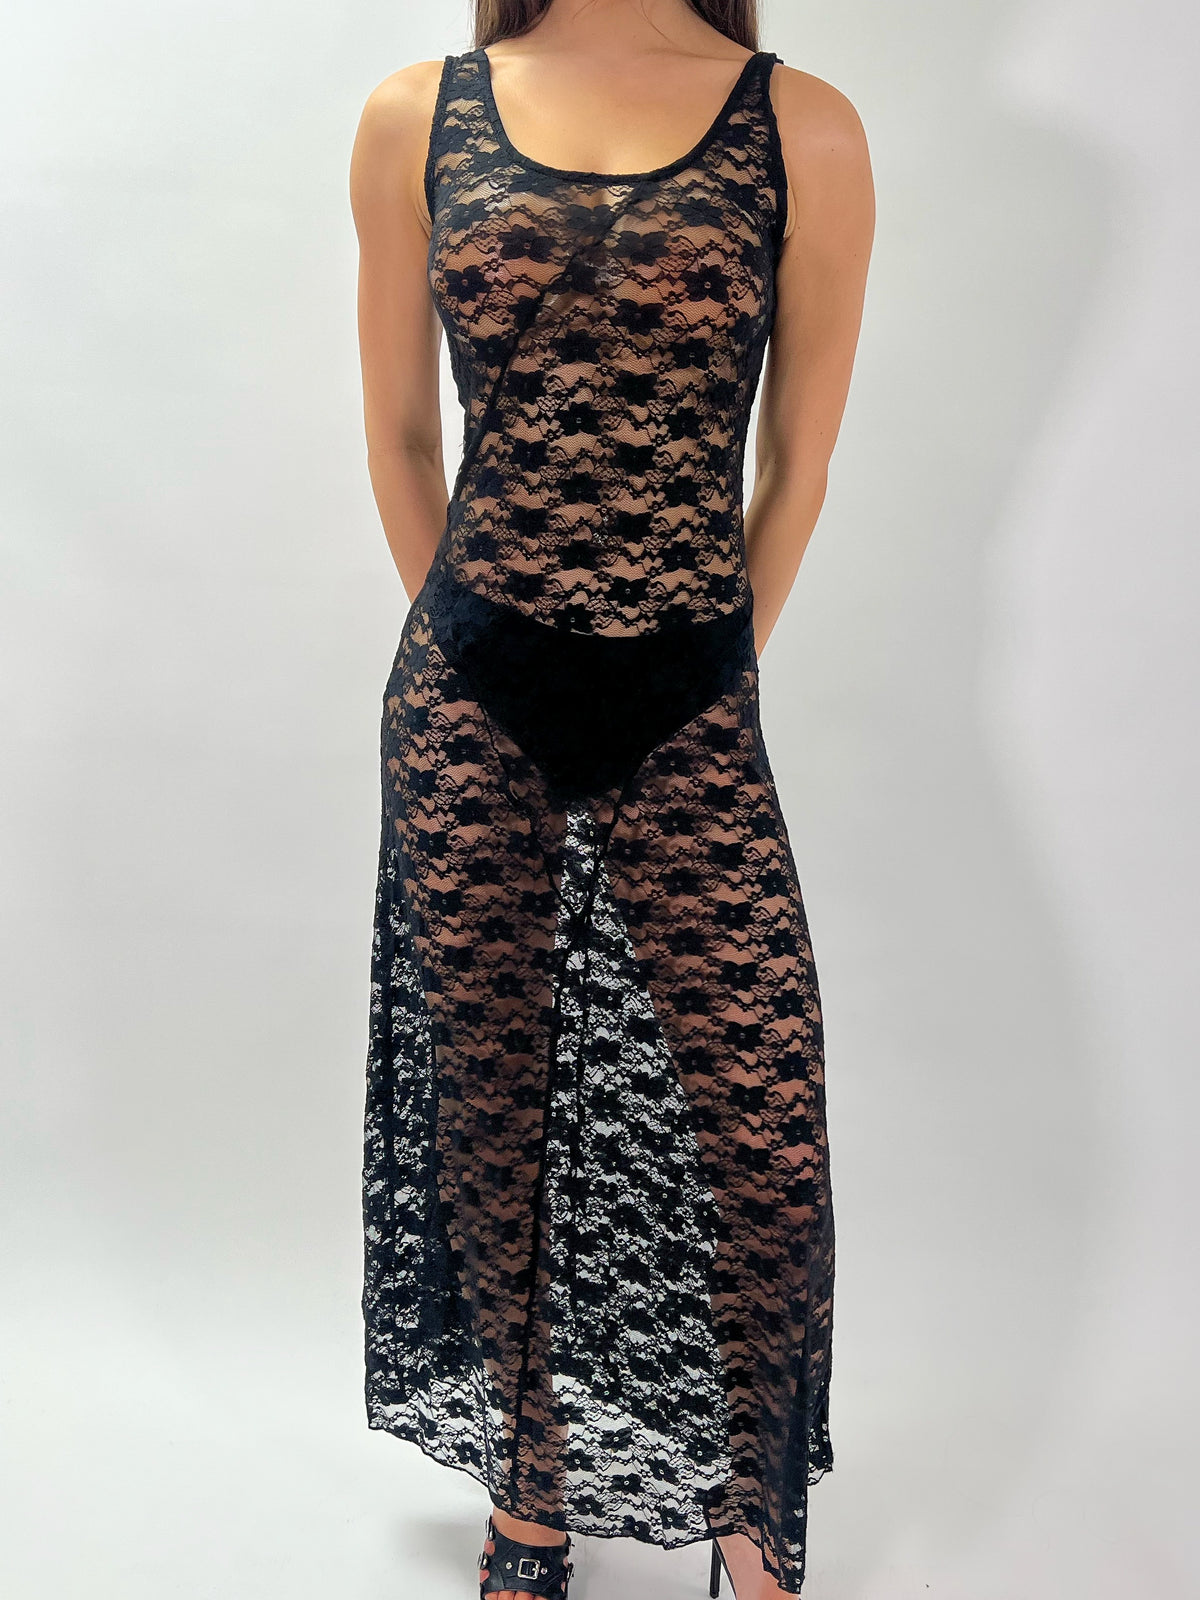 Jessica Sheer Lace Dress (Black)